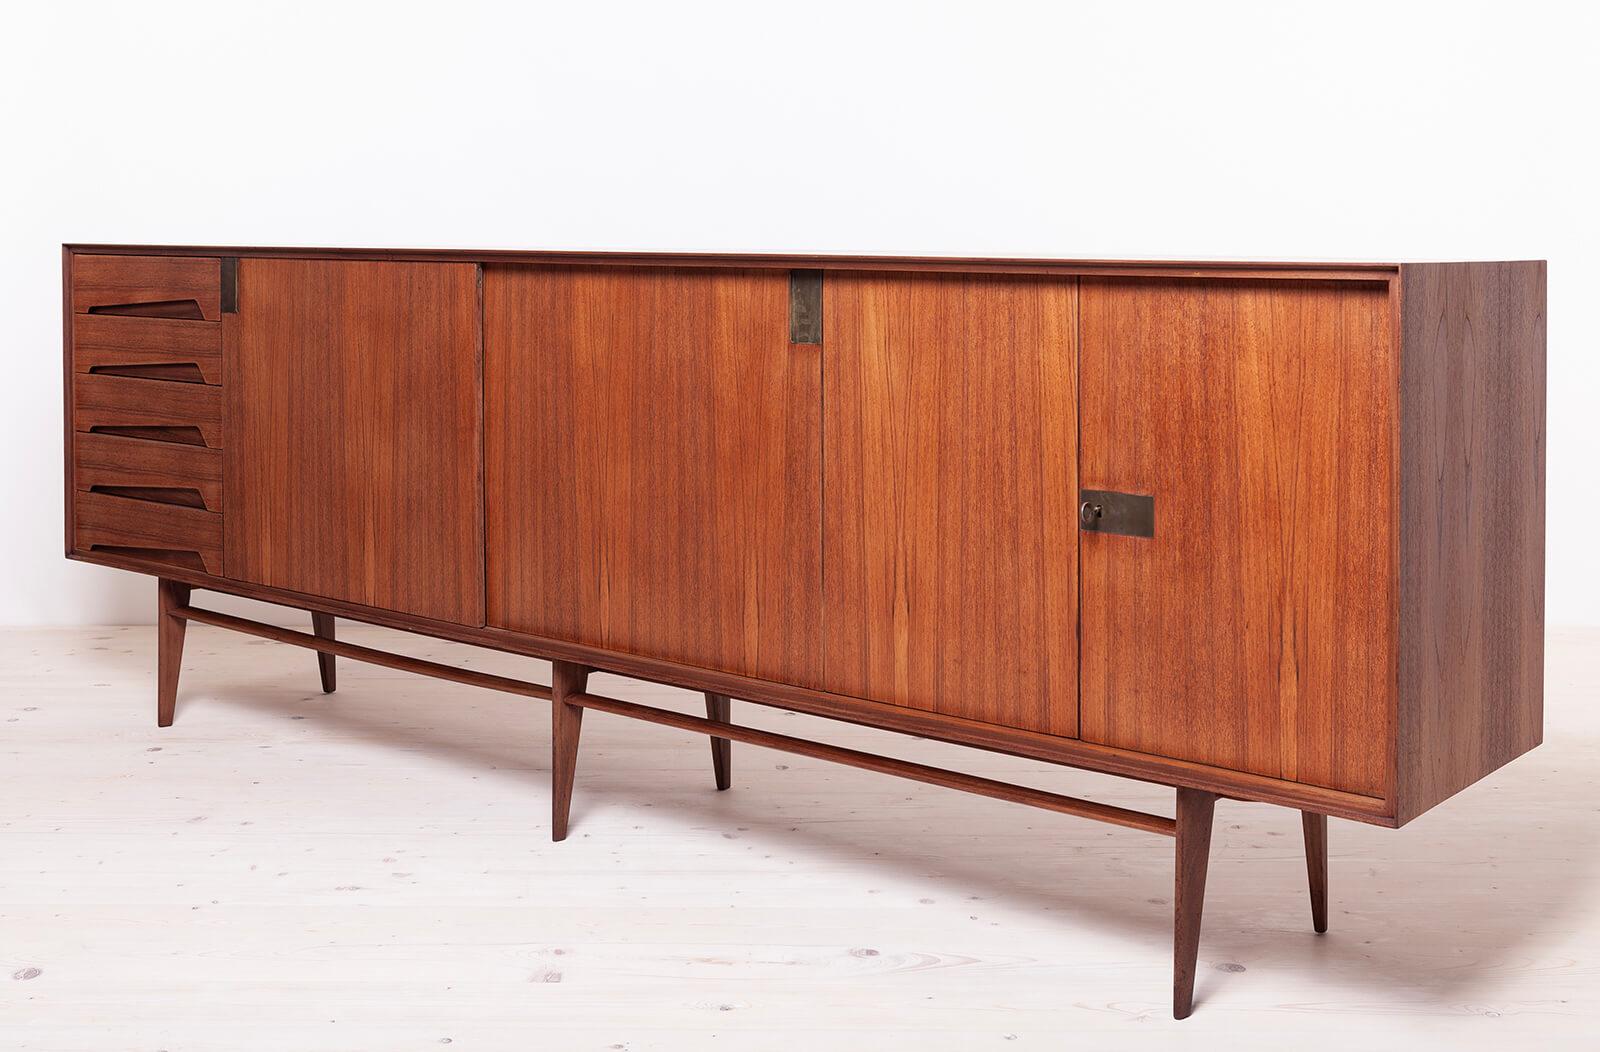 Mid-20th Century Vintage Midcentury Sideboard: Edmondo Palutari Design, Teak Wood & Brass Details For Sale